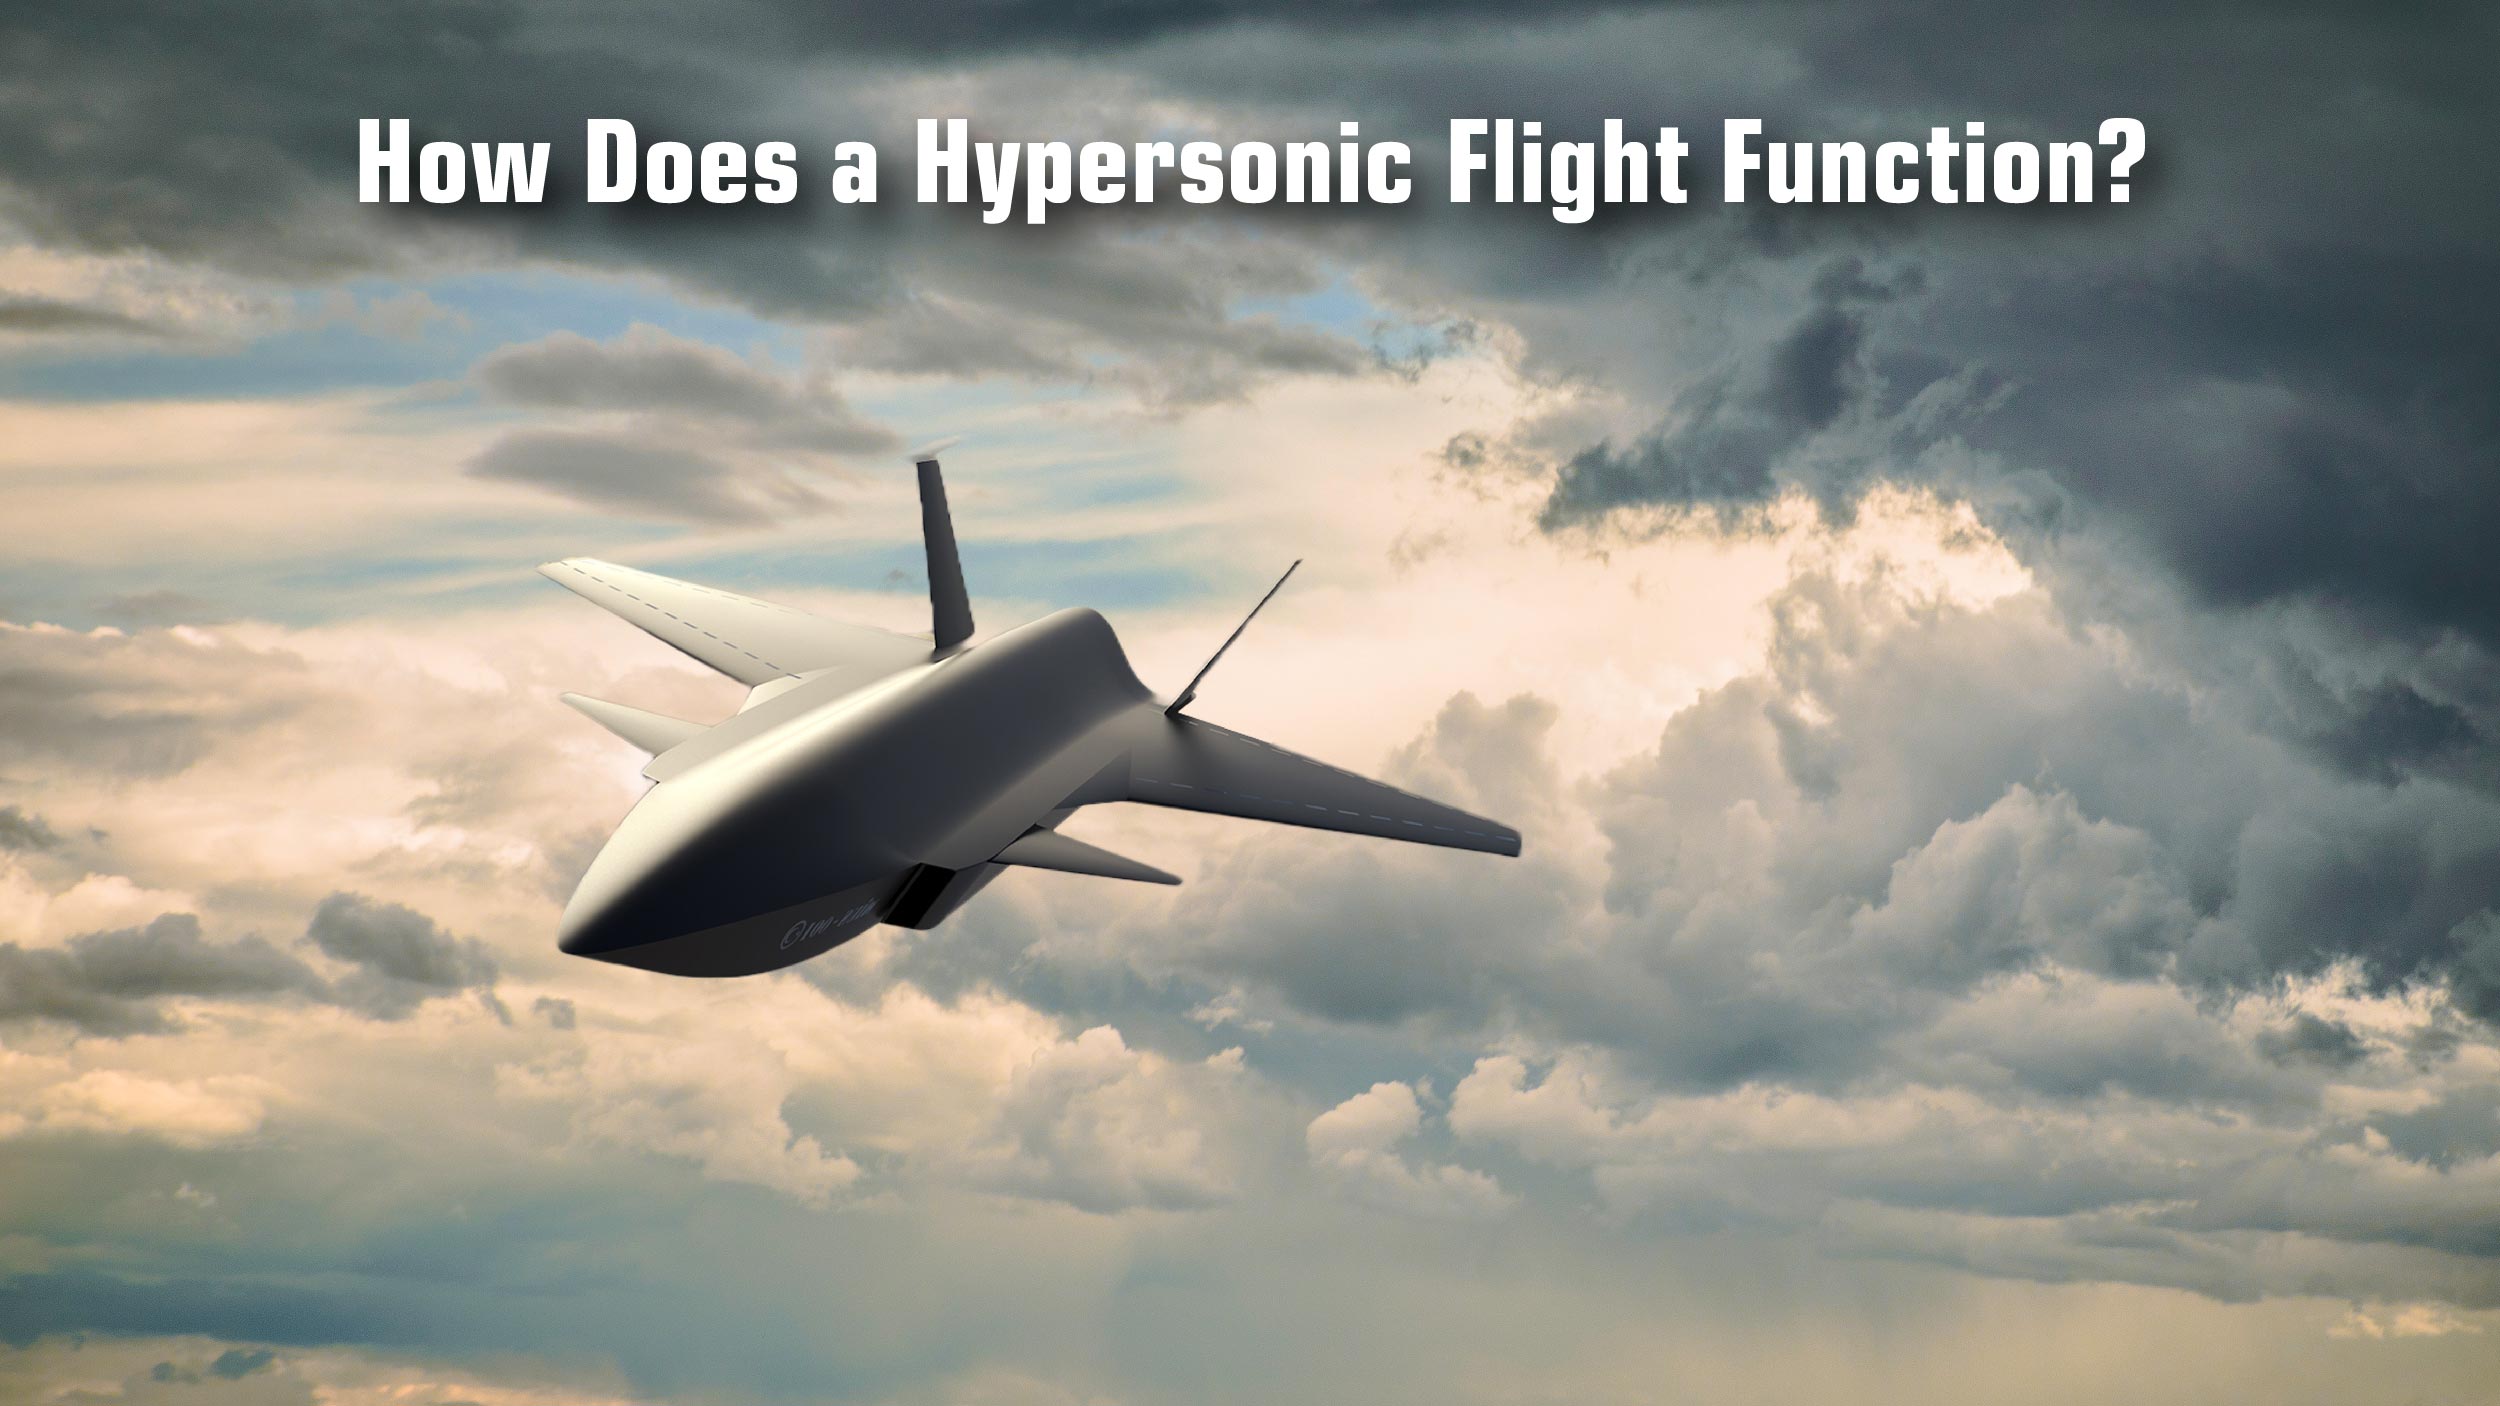 Hypersonic flight